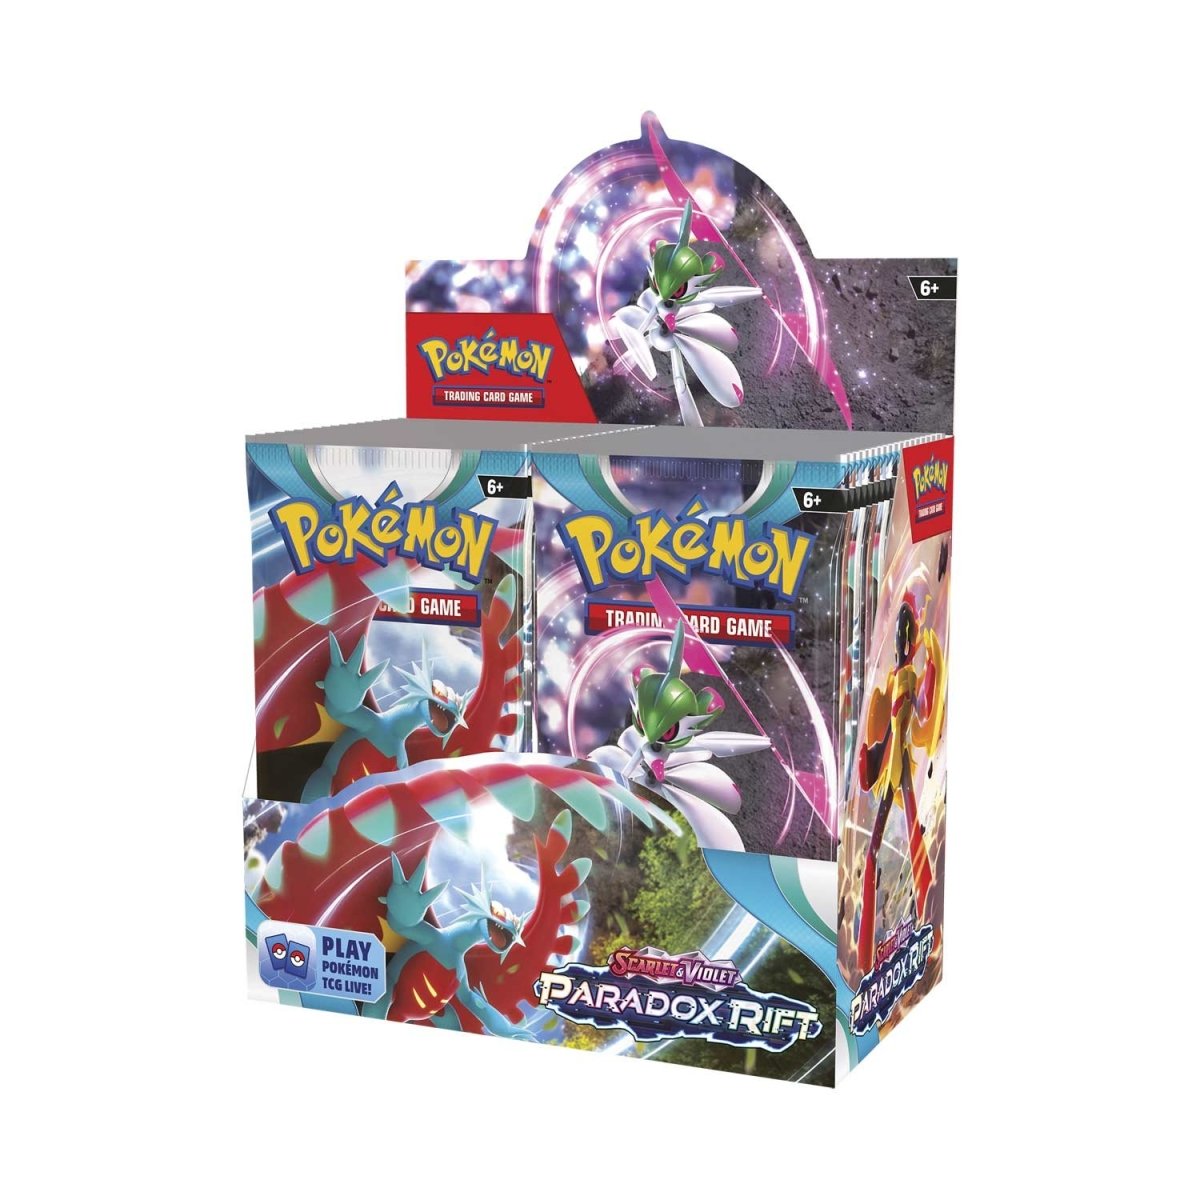 401 Games Canada - Pokemon - Scarlet and Violet - Base Set - Booster Box